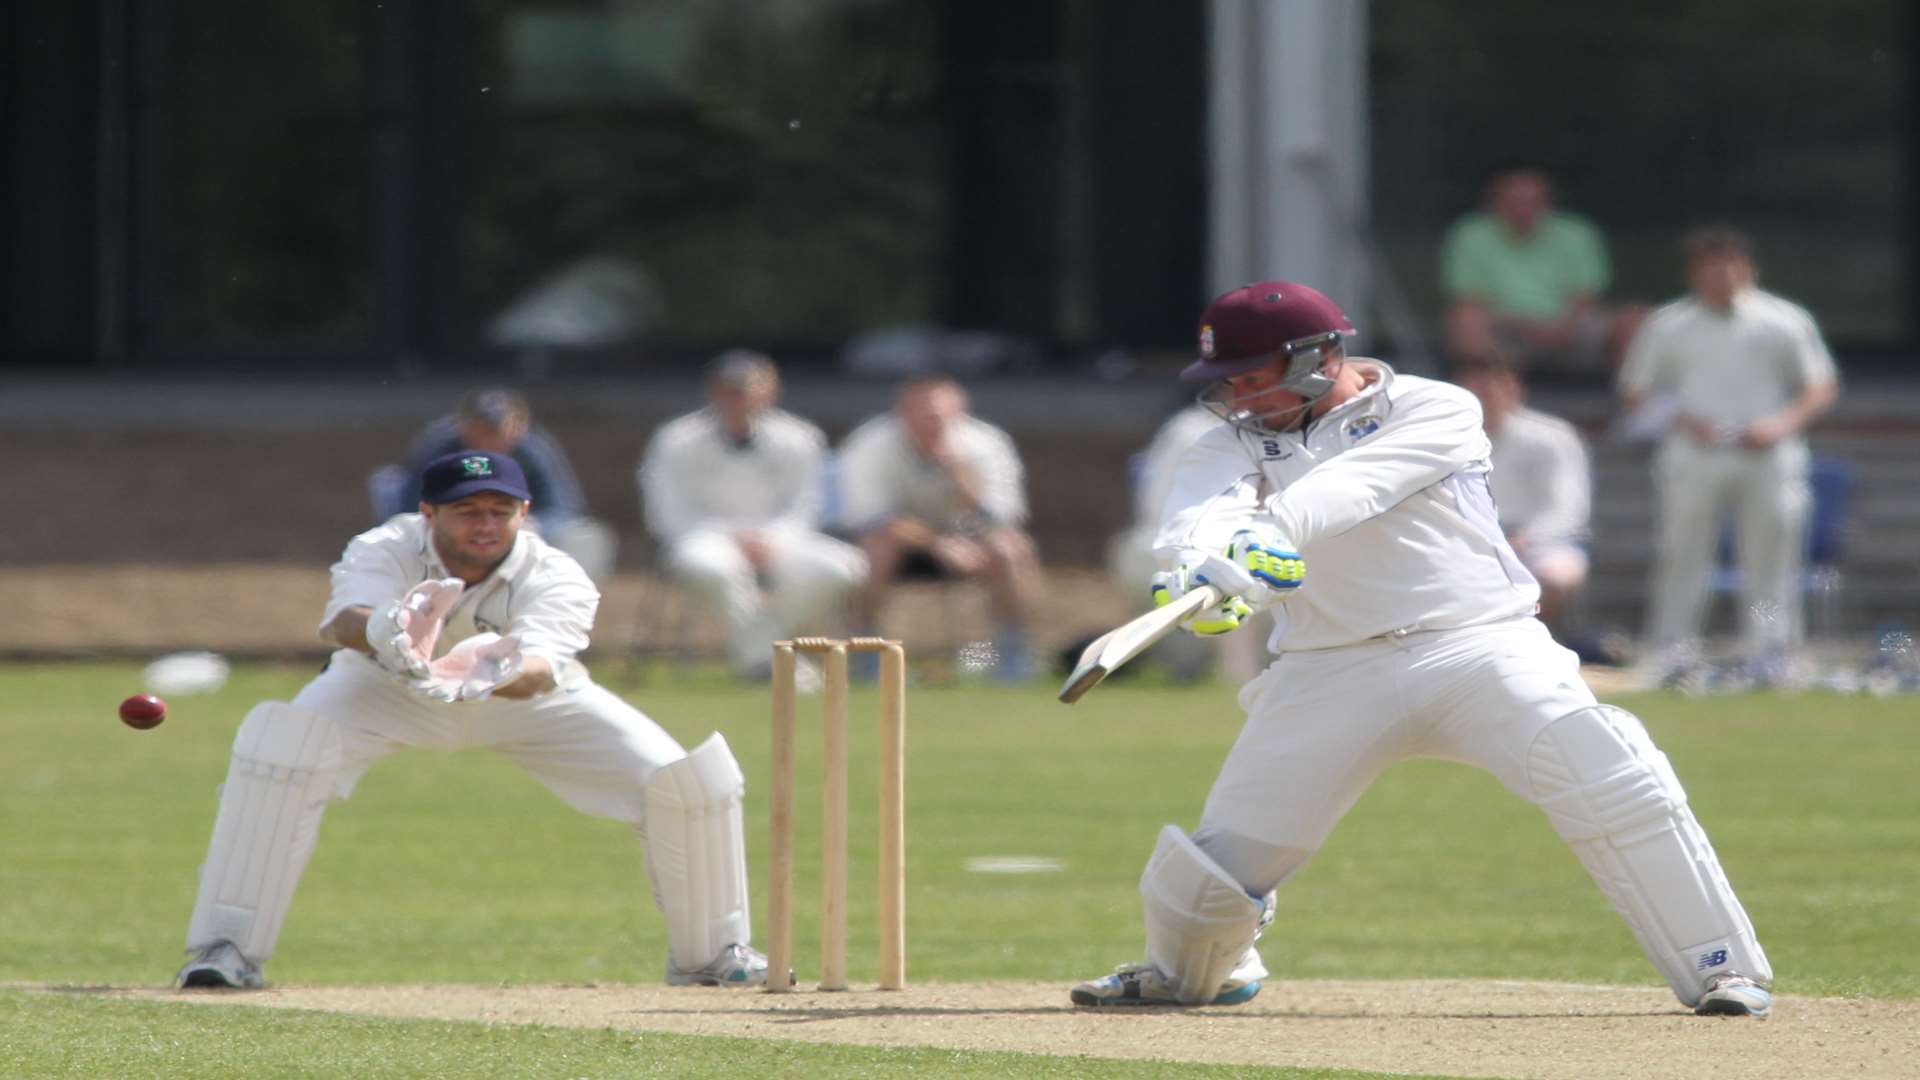 Dartford wicketkeeper Gavin Pointer behind the stumps during Canterbury's innings Picture: John Westhrop